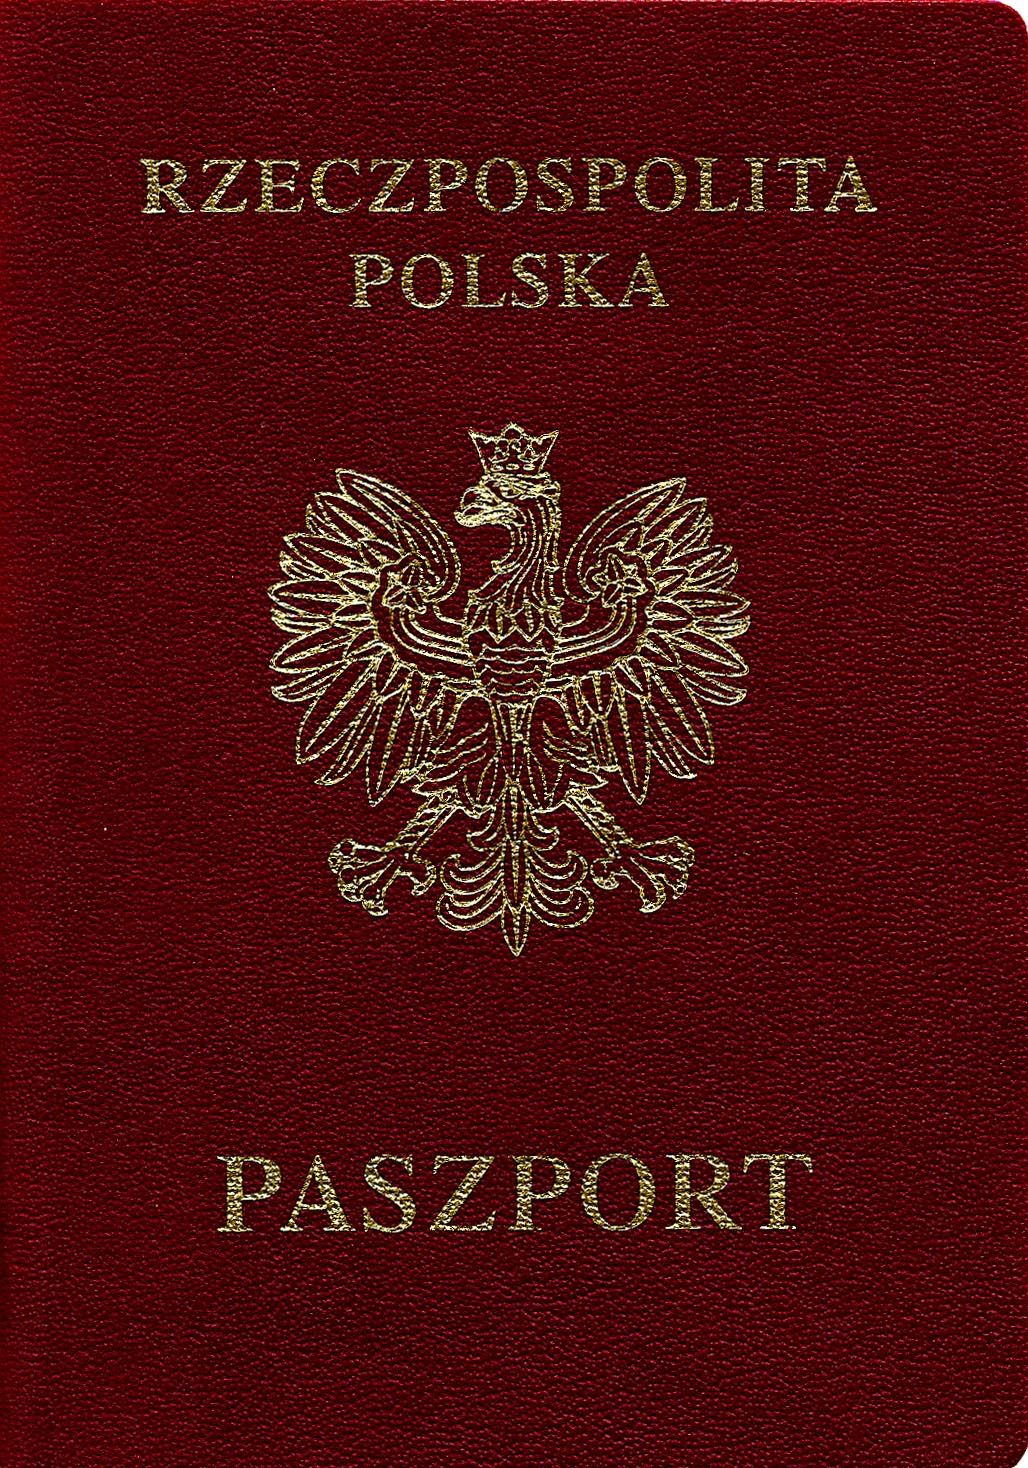 Polish passport holders